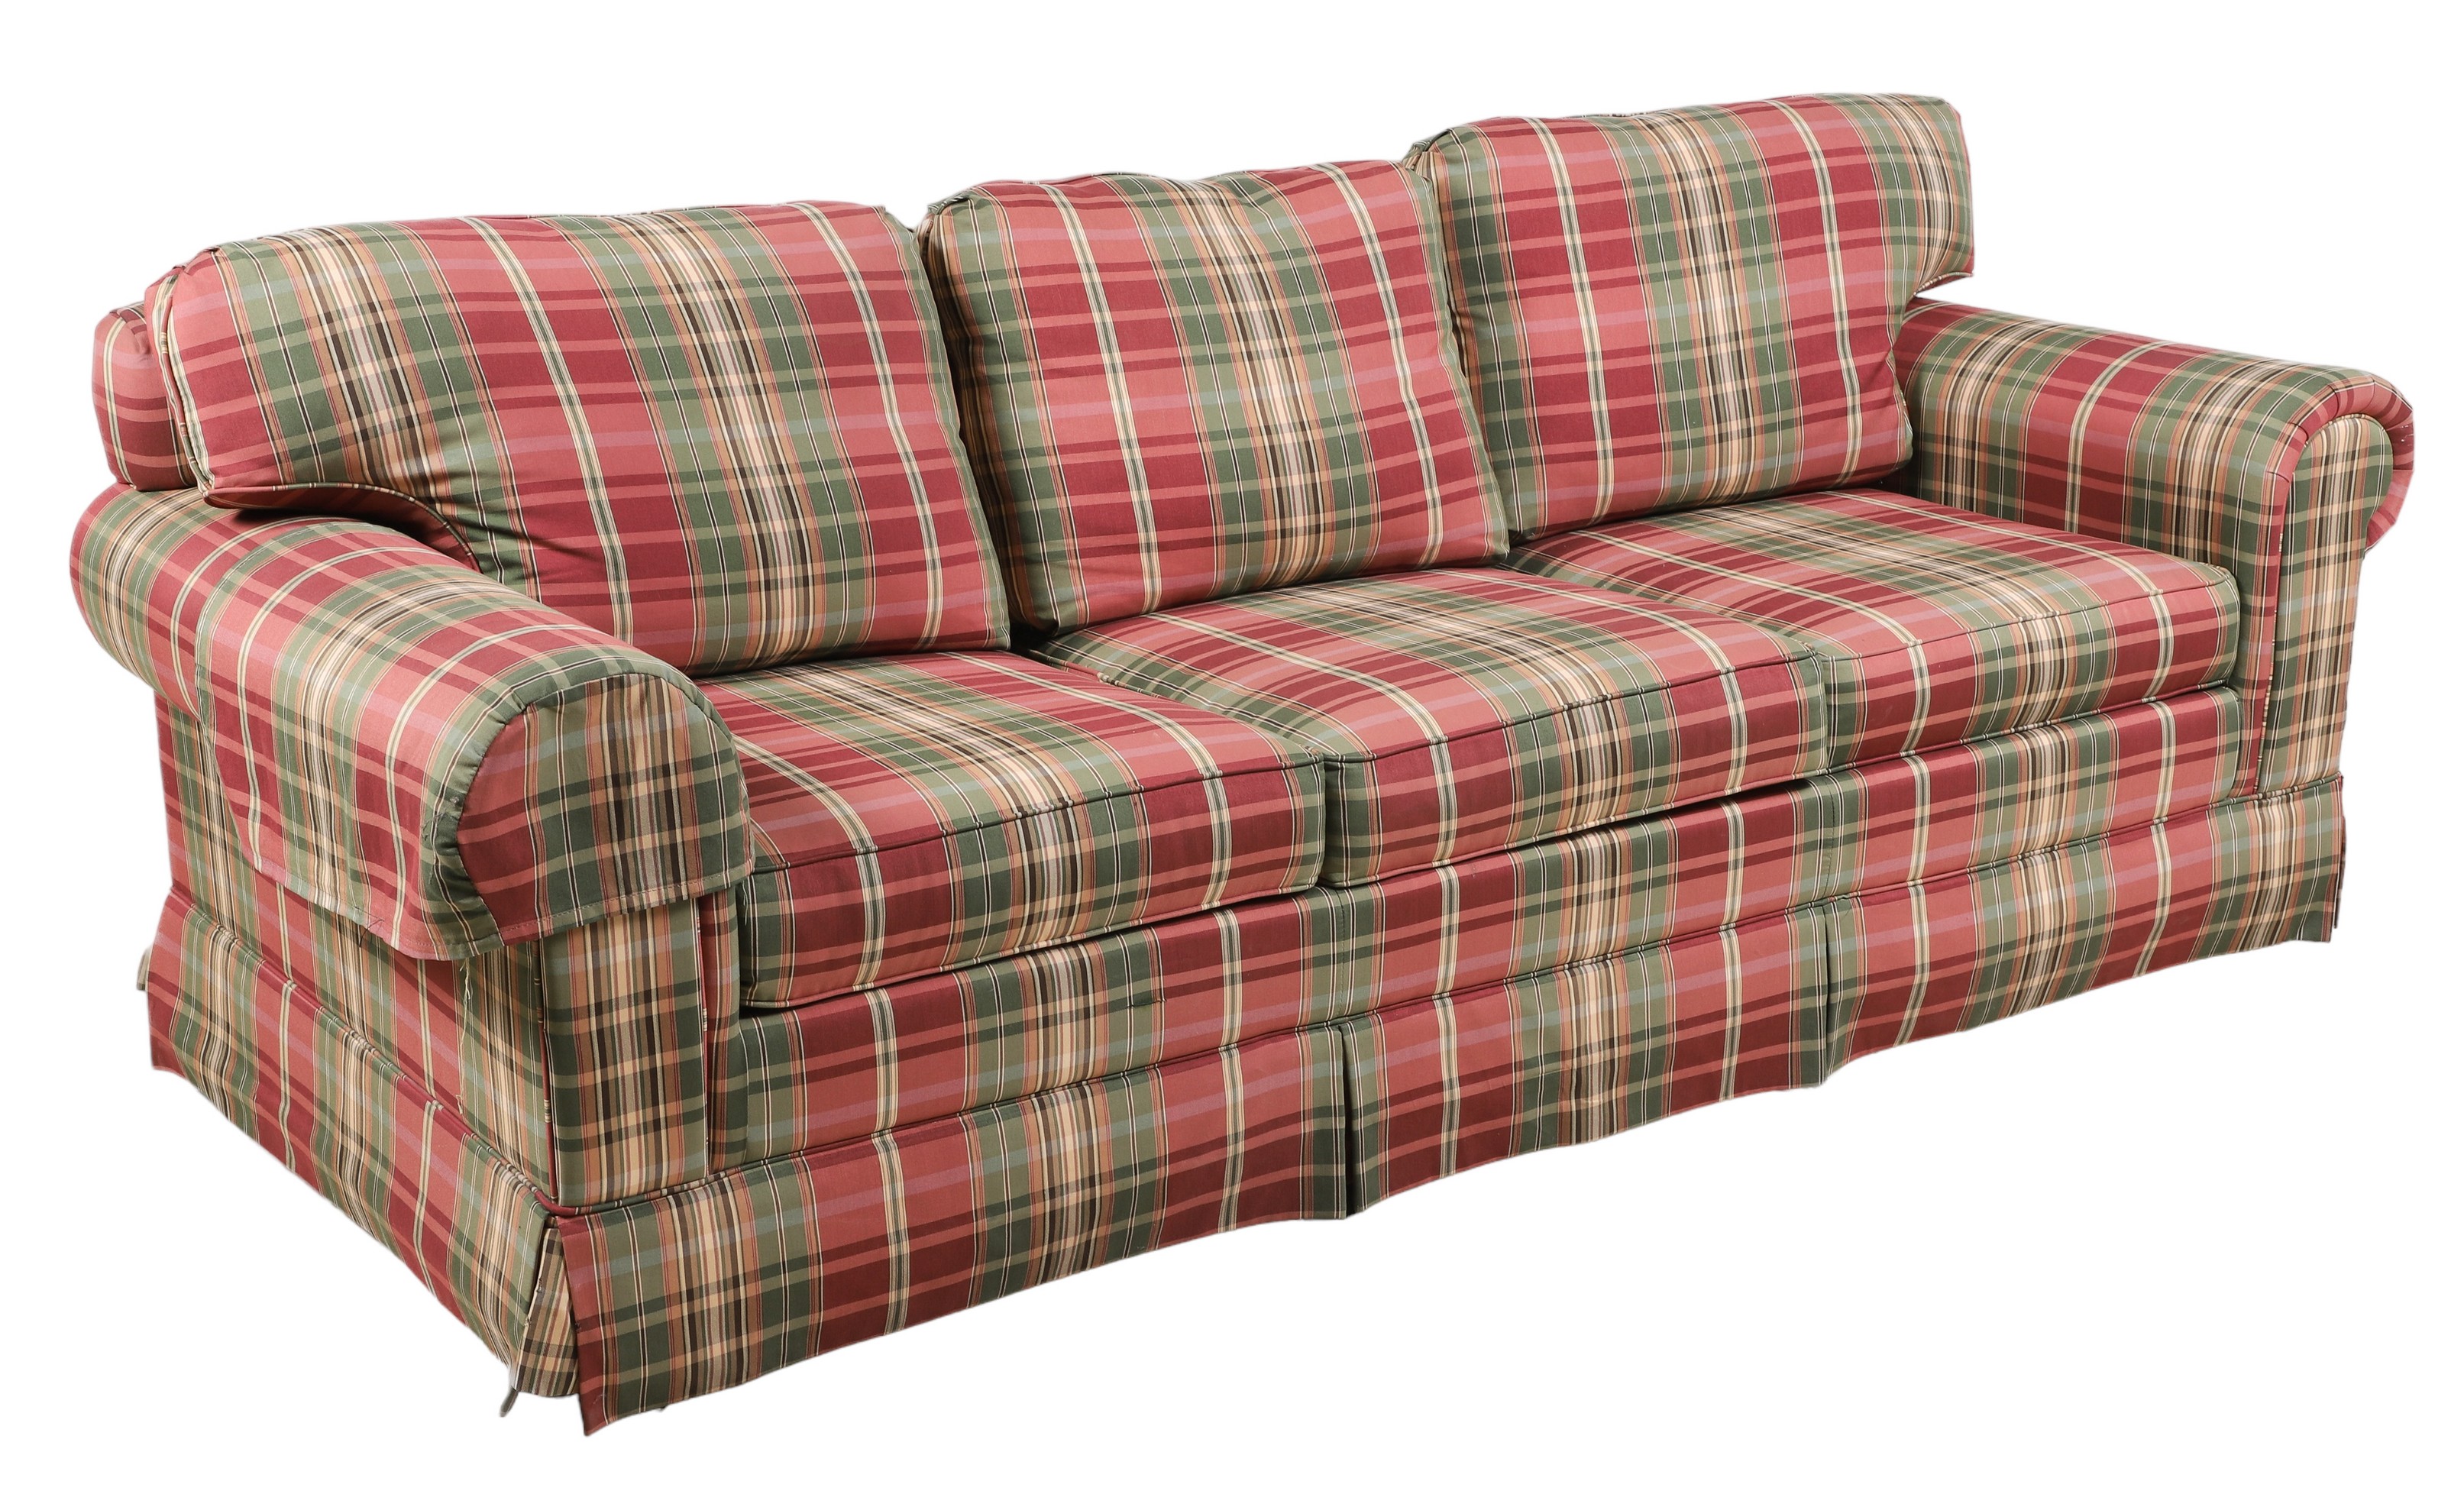 Hammary upholstered sleeper sofa,